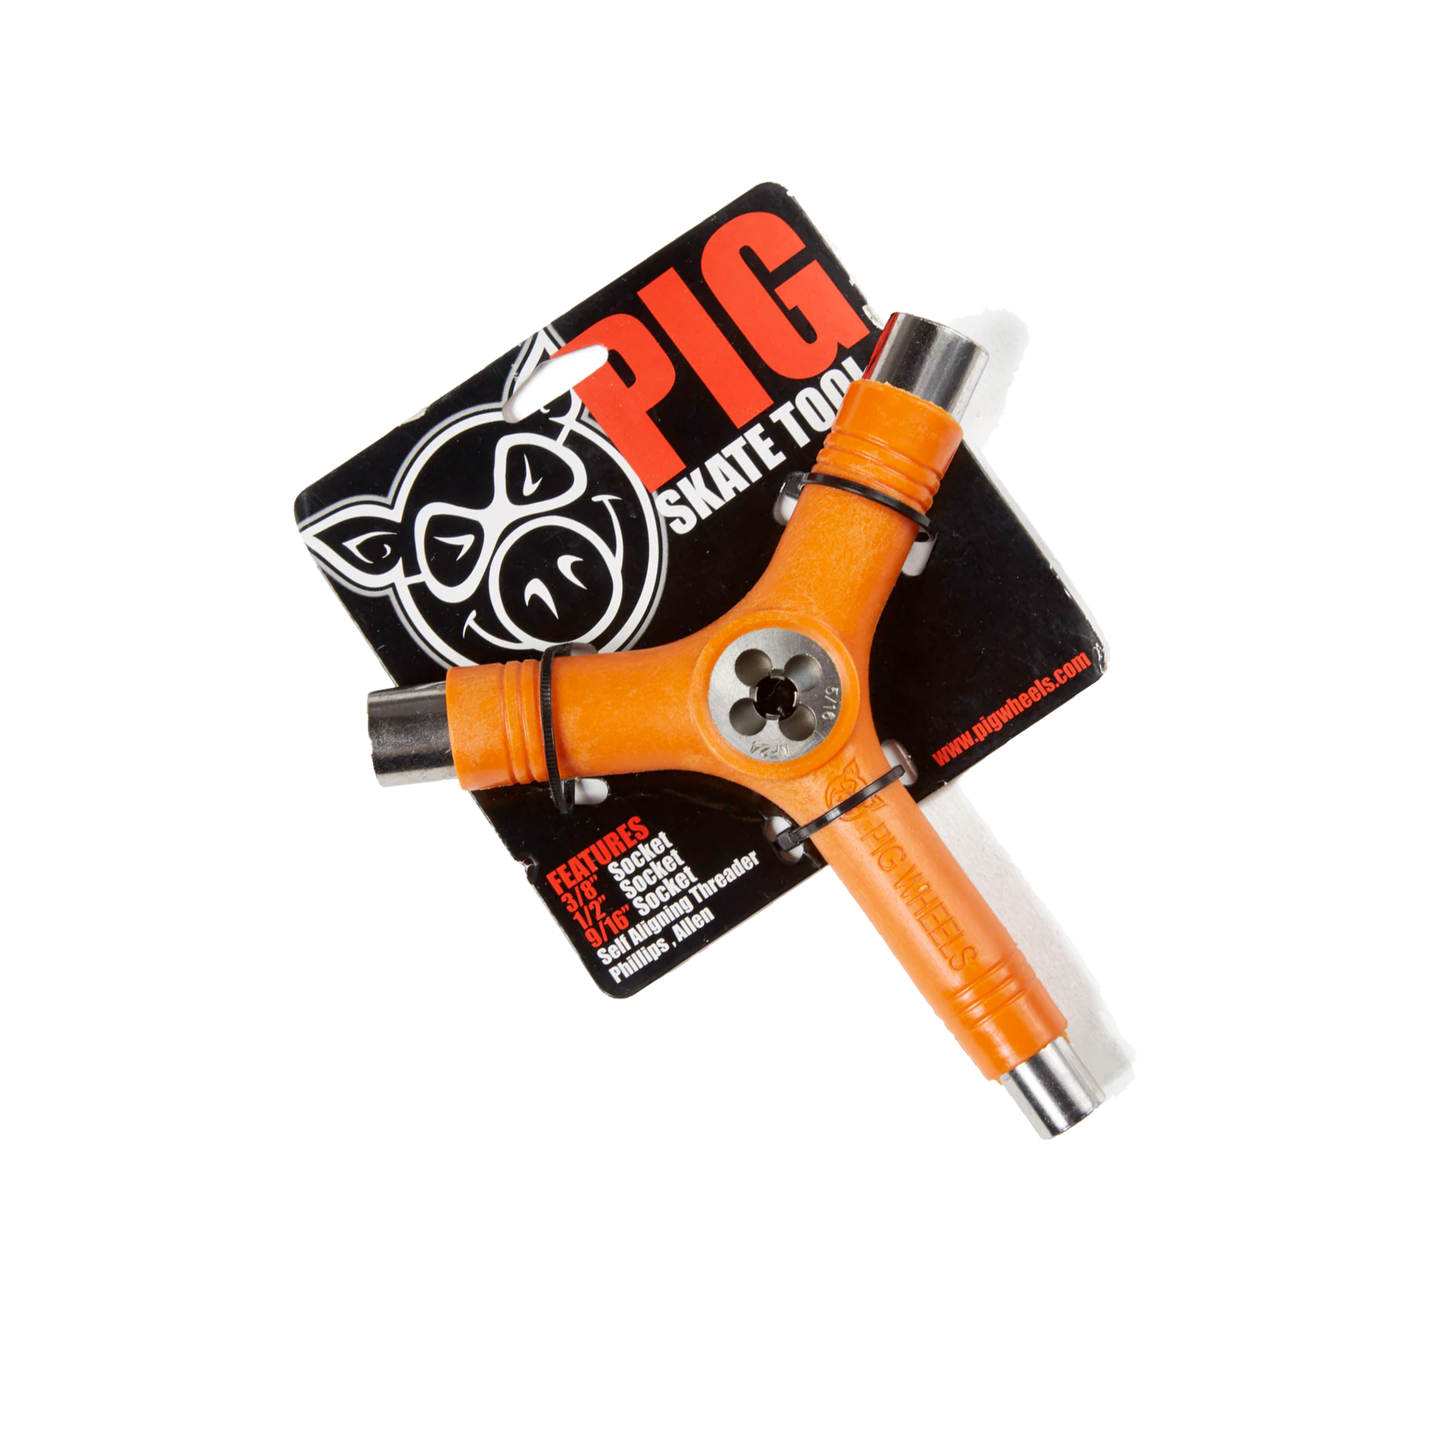 Pig Rethreading Skate Tool - Orange